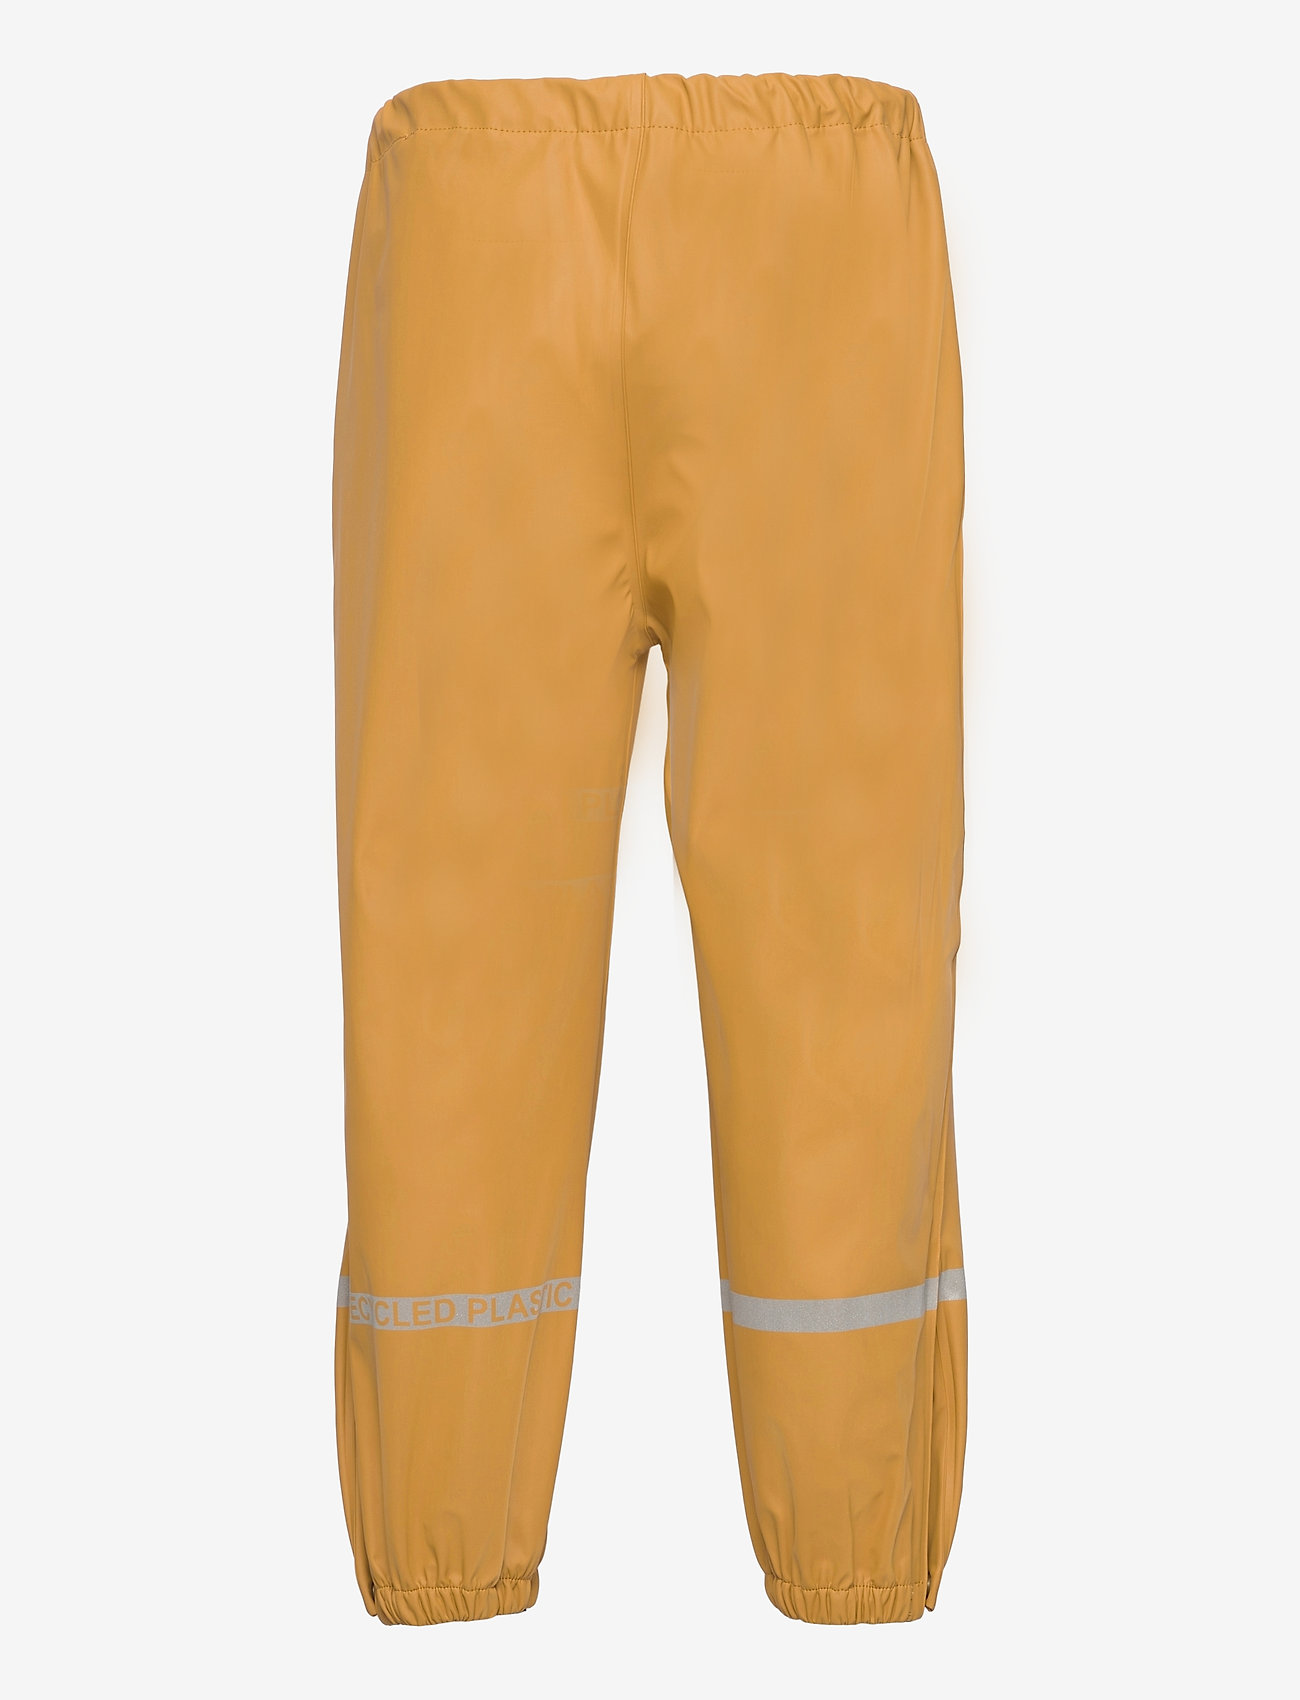 mikk-line - PU Rain Pants / Susp 104 - honey mustard - 1